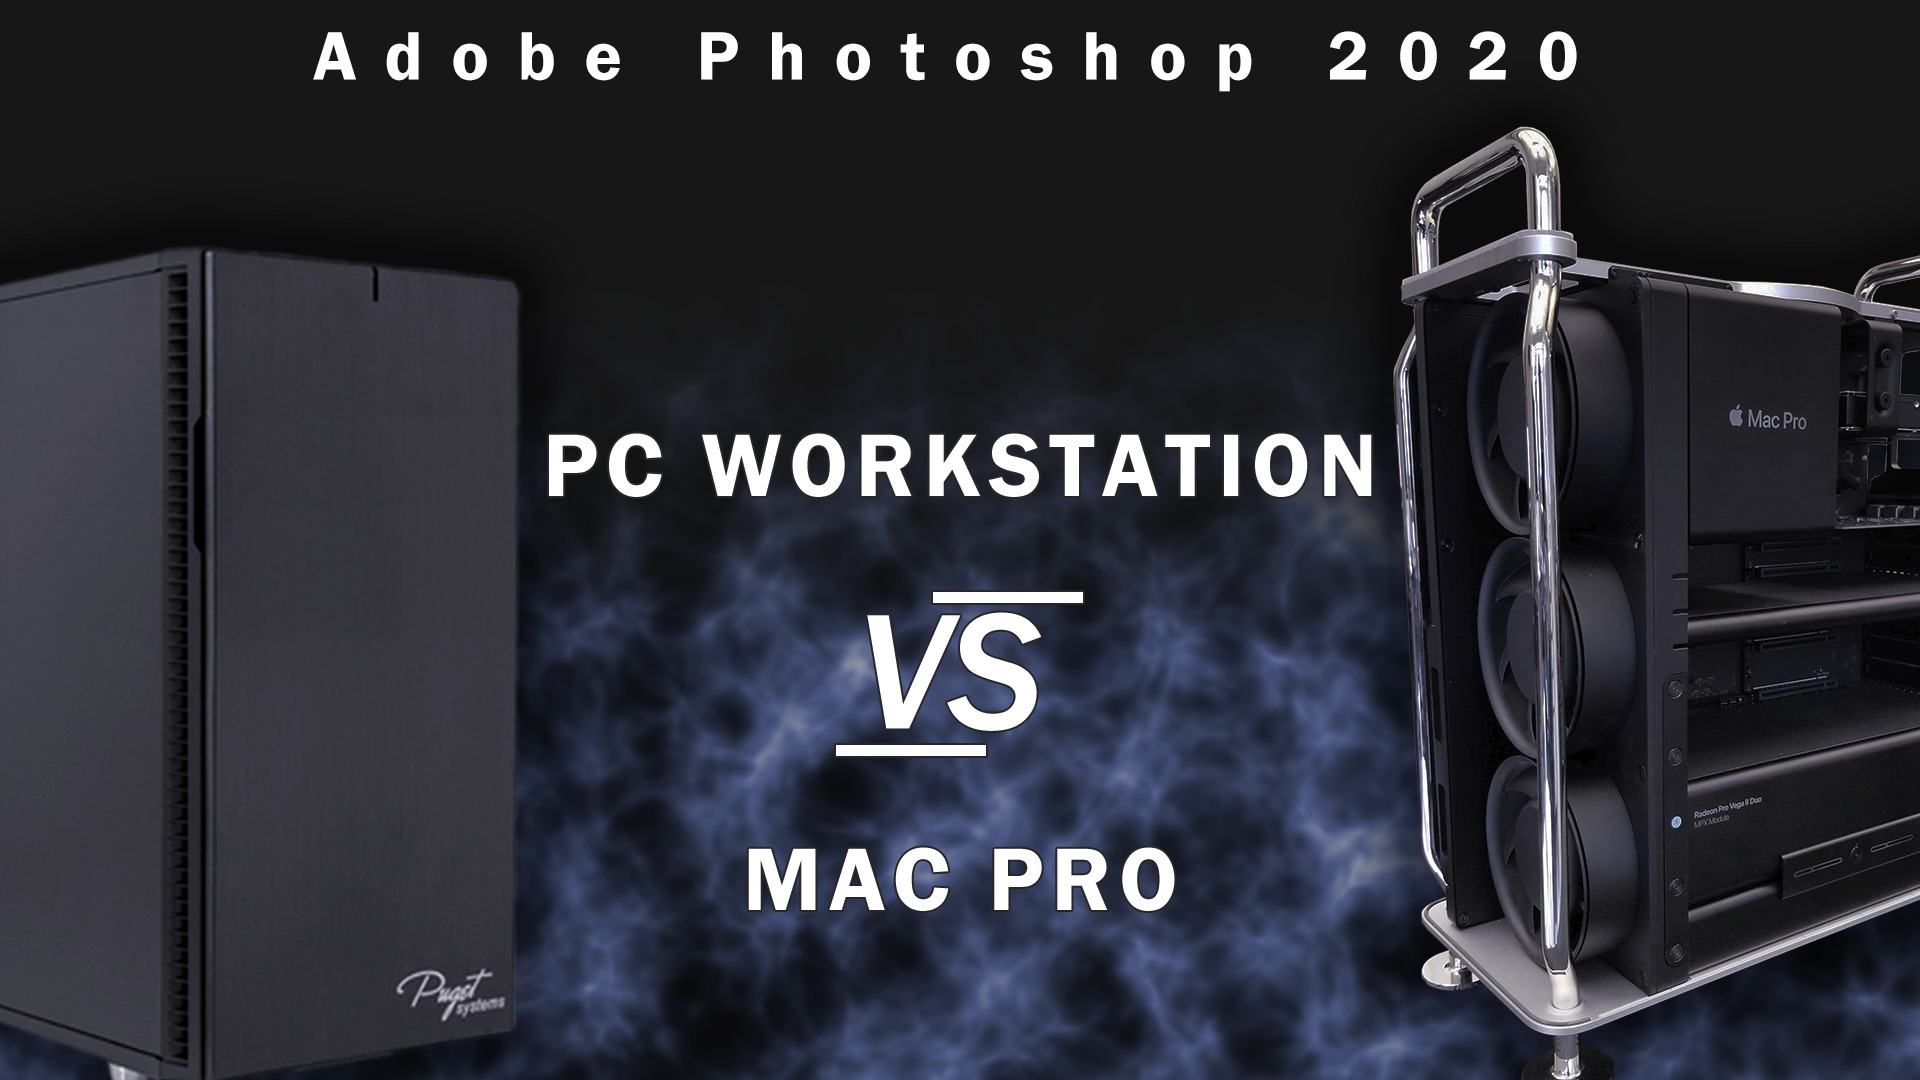 Mac Pro vs PC workstation for Adobe Photoshop